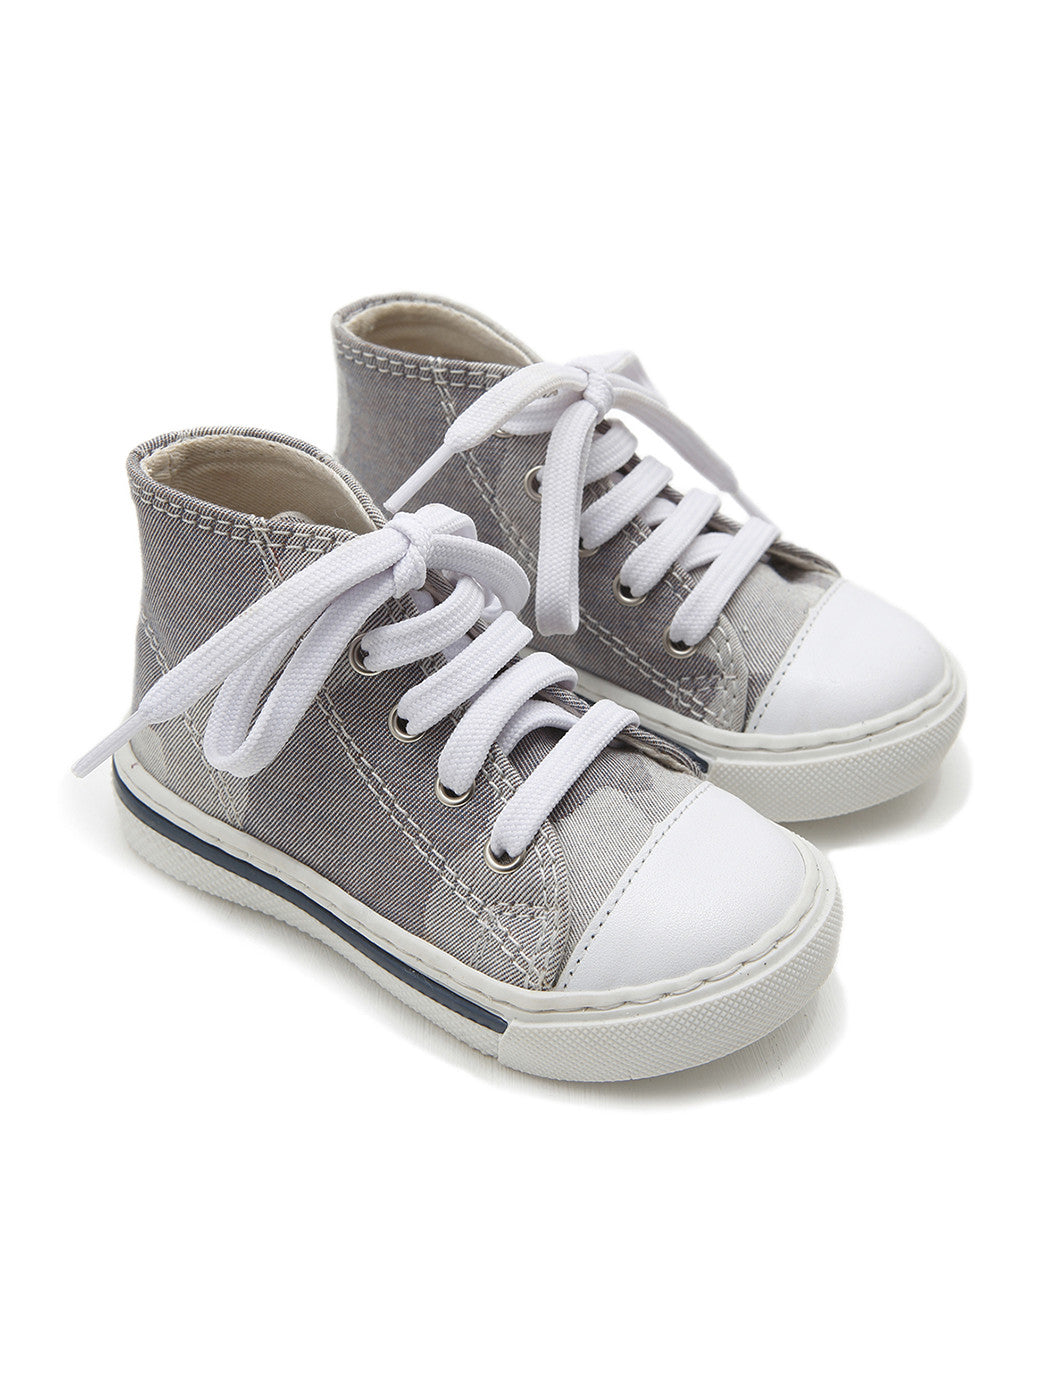 Baby bootie shoe for boy-DIEGO Grey